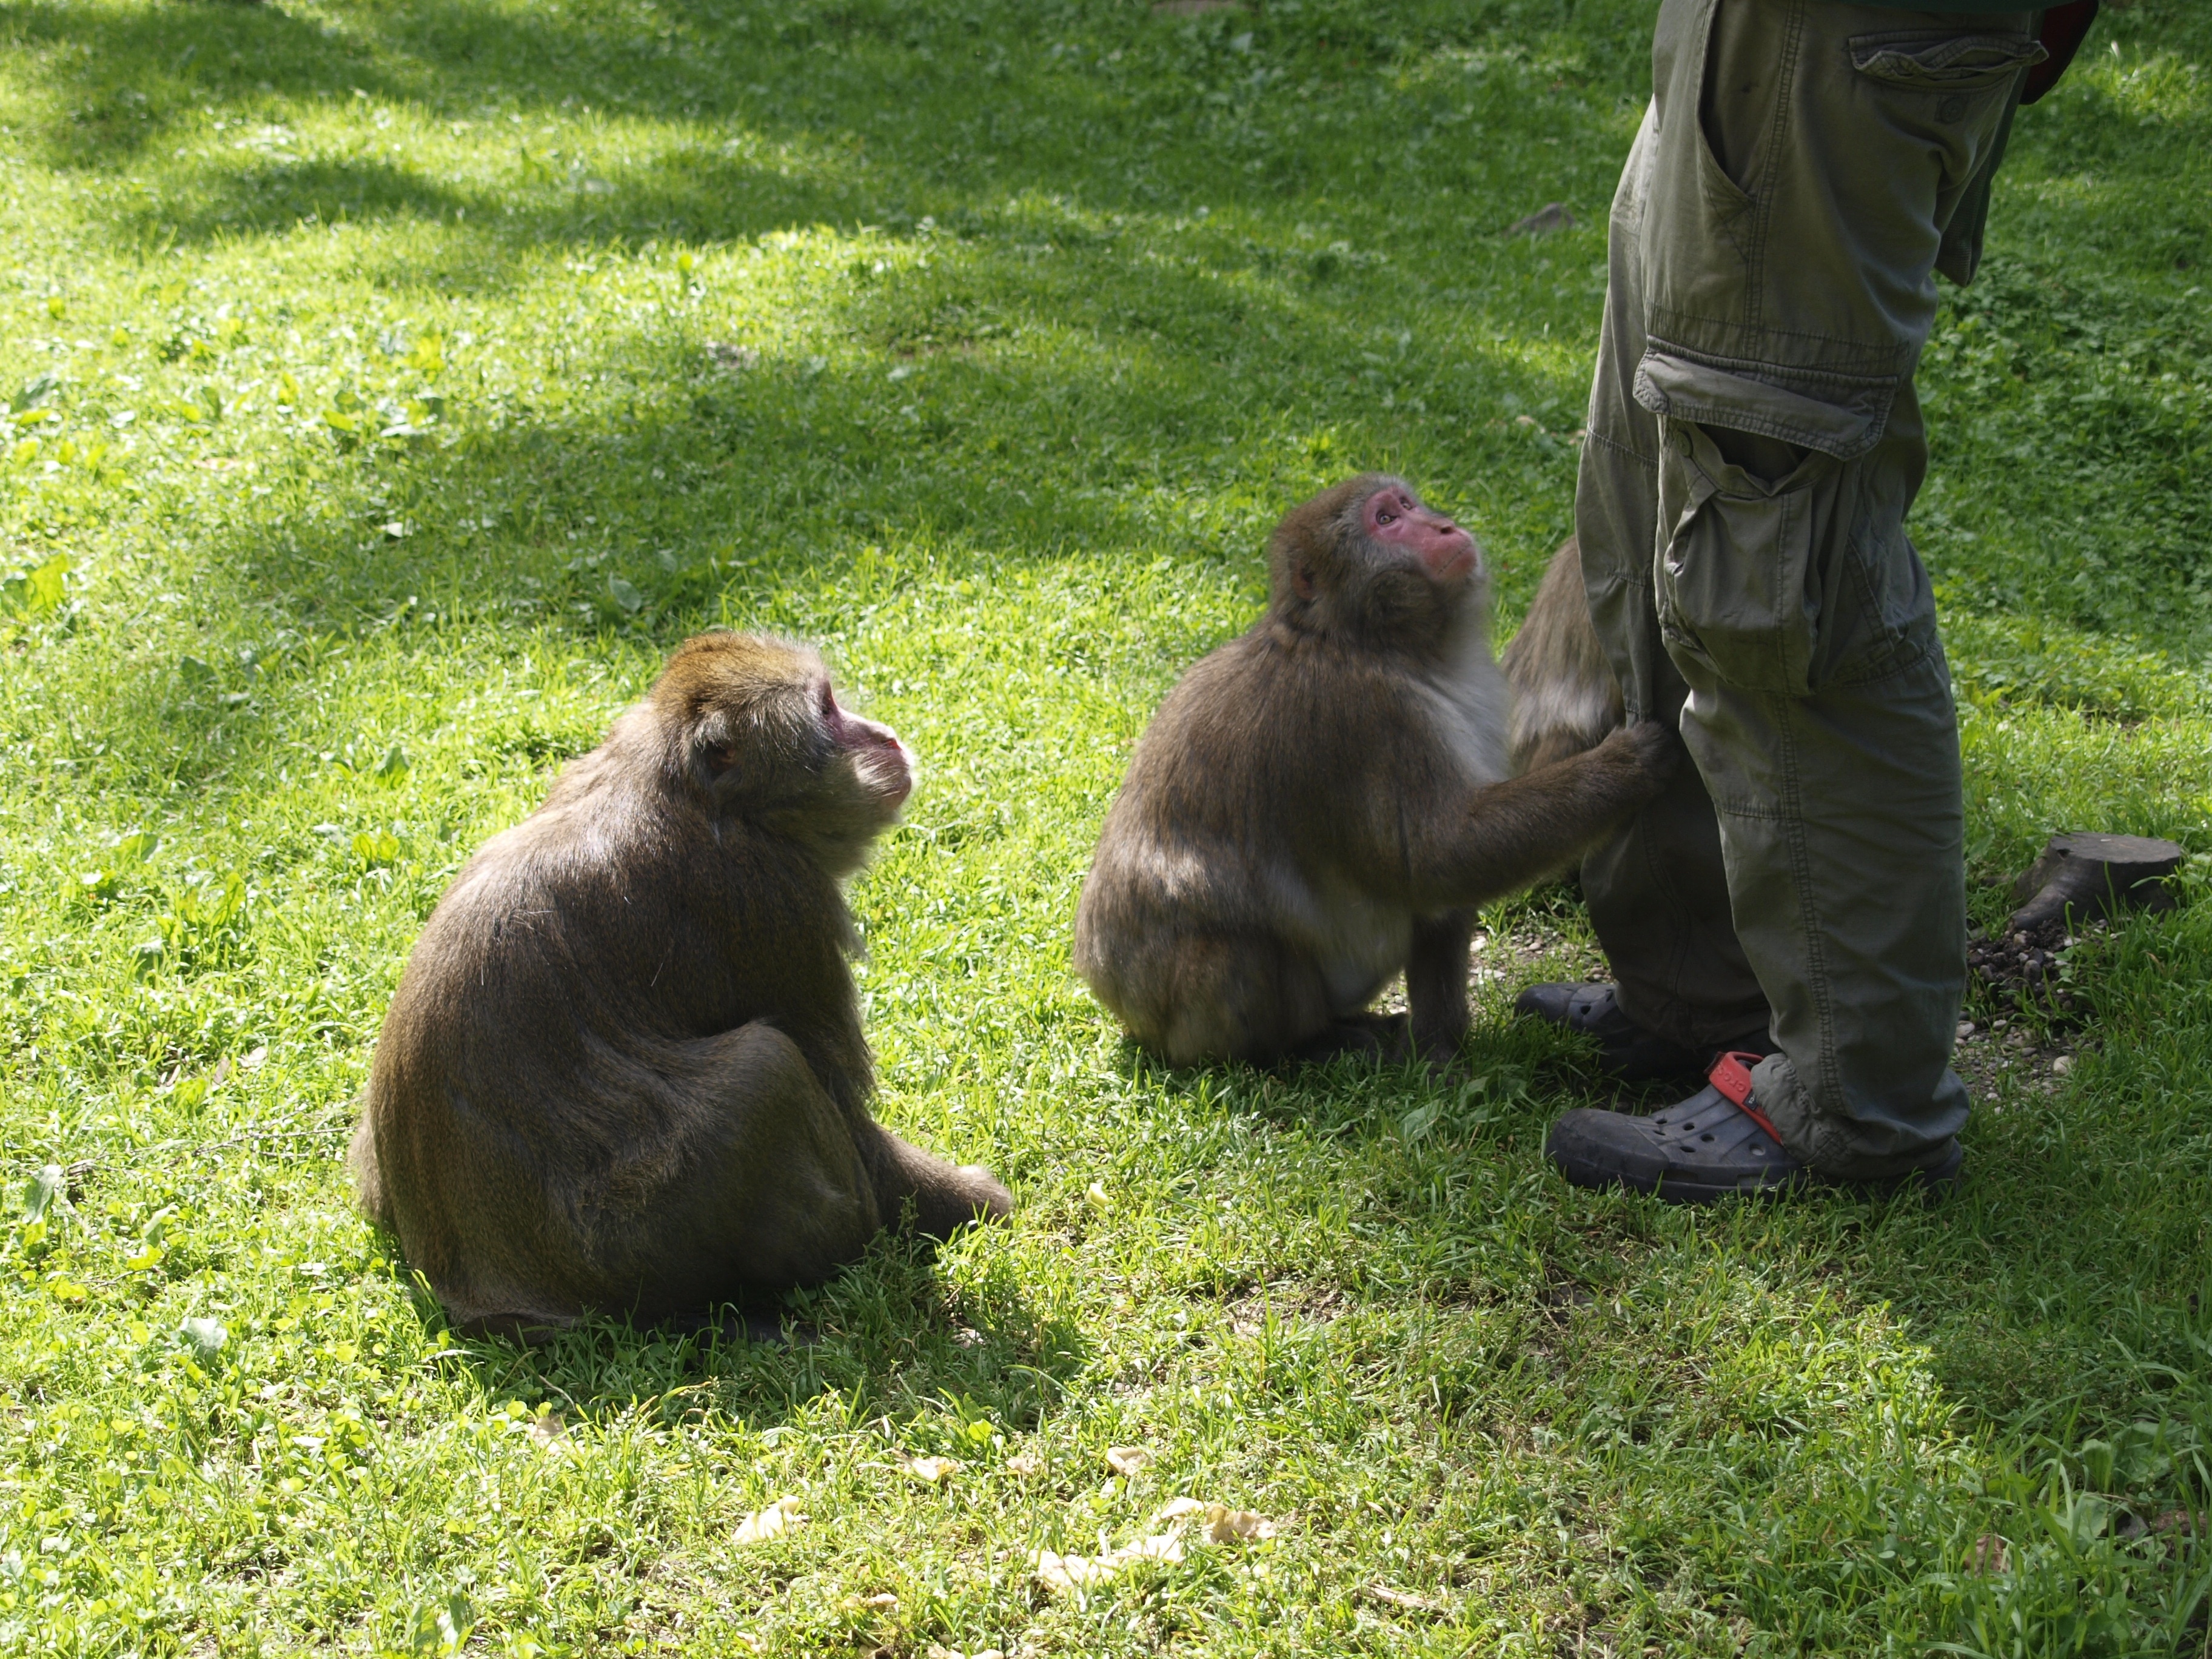 2 brown monkeys